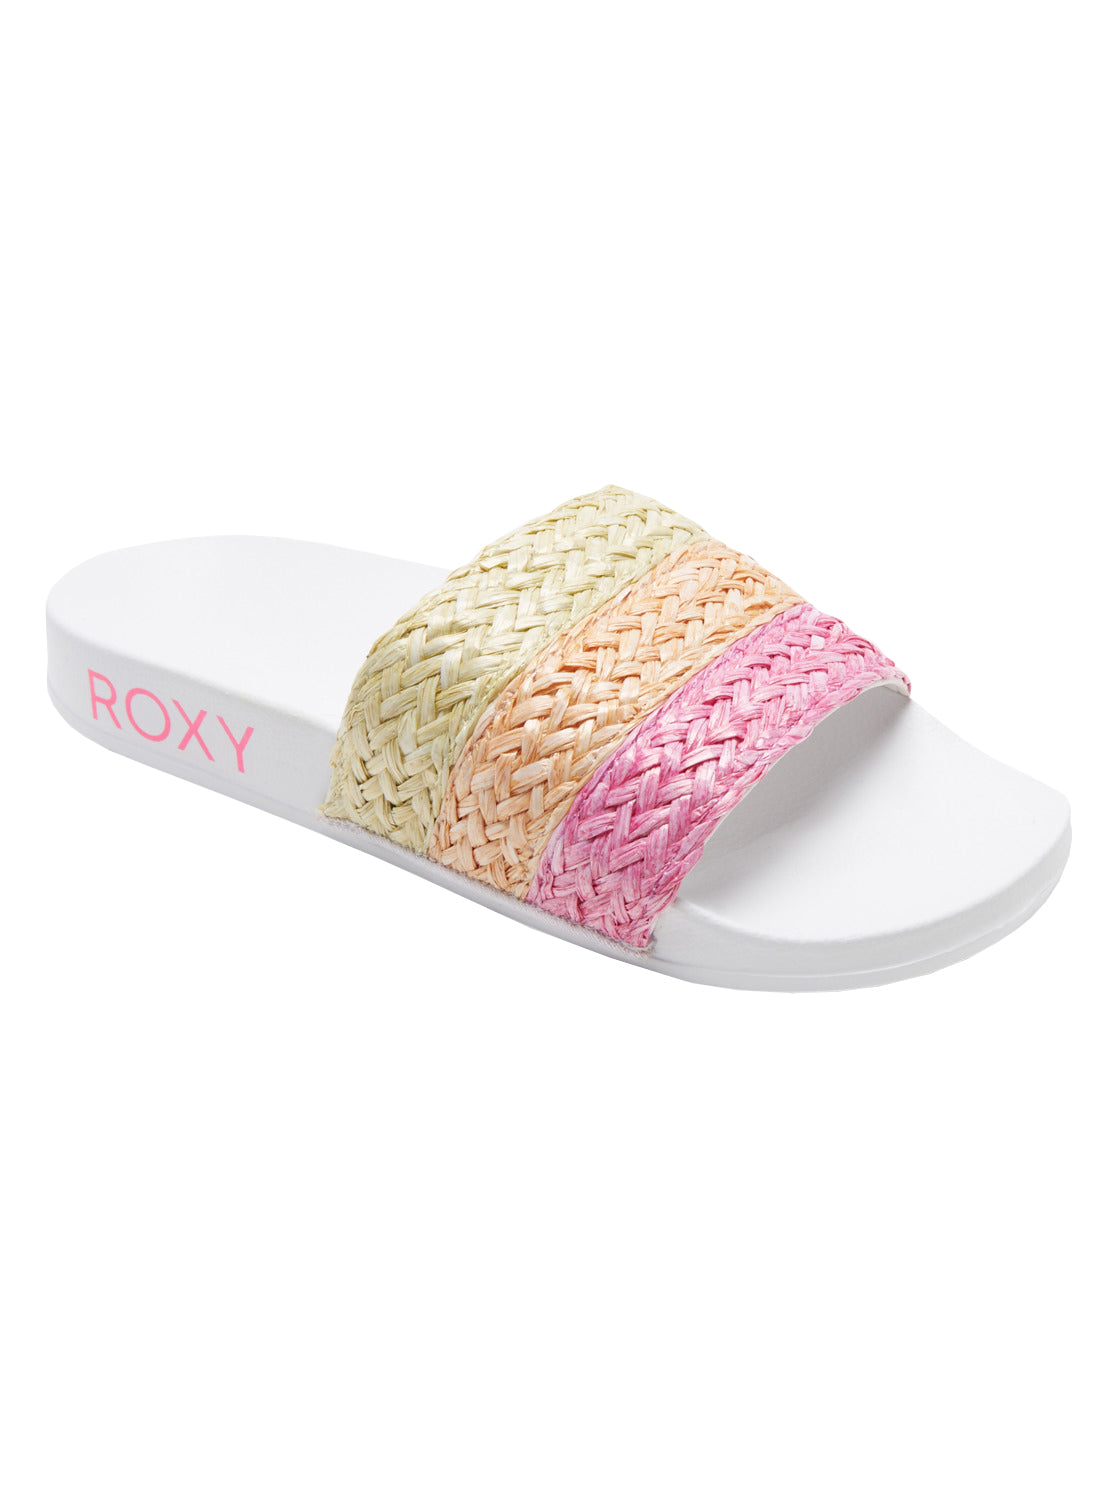 Roxy Slippy Jute Womens Sandal TPO-White-Crazy Pink-Orange 11